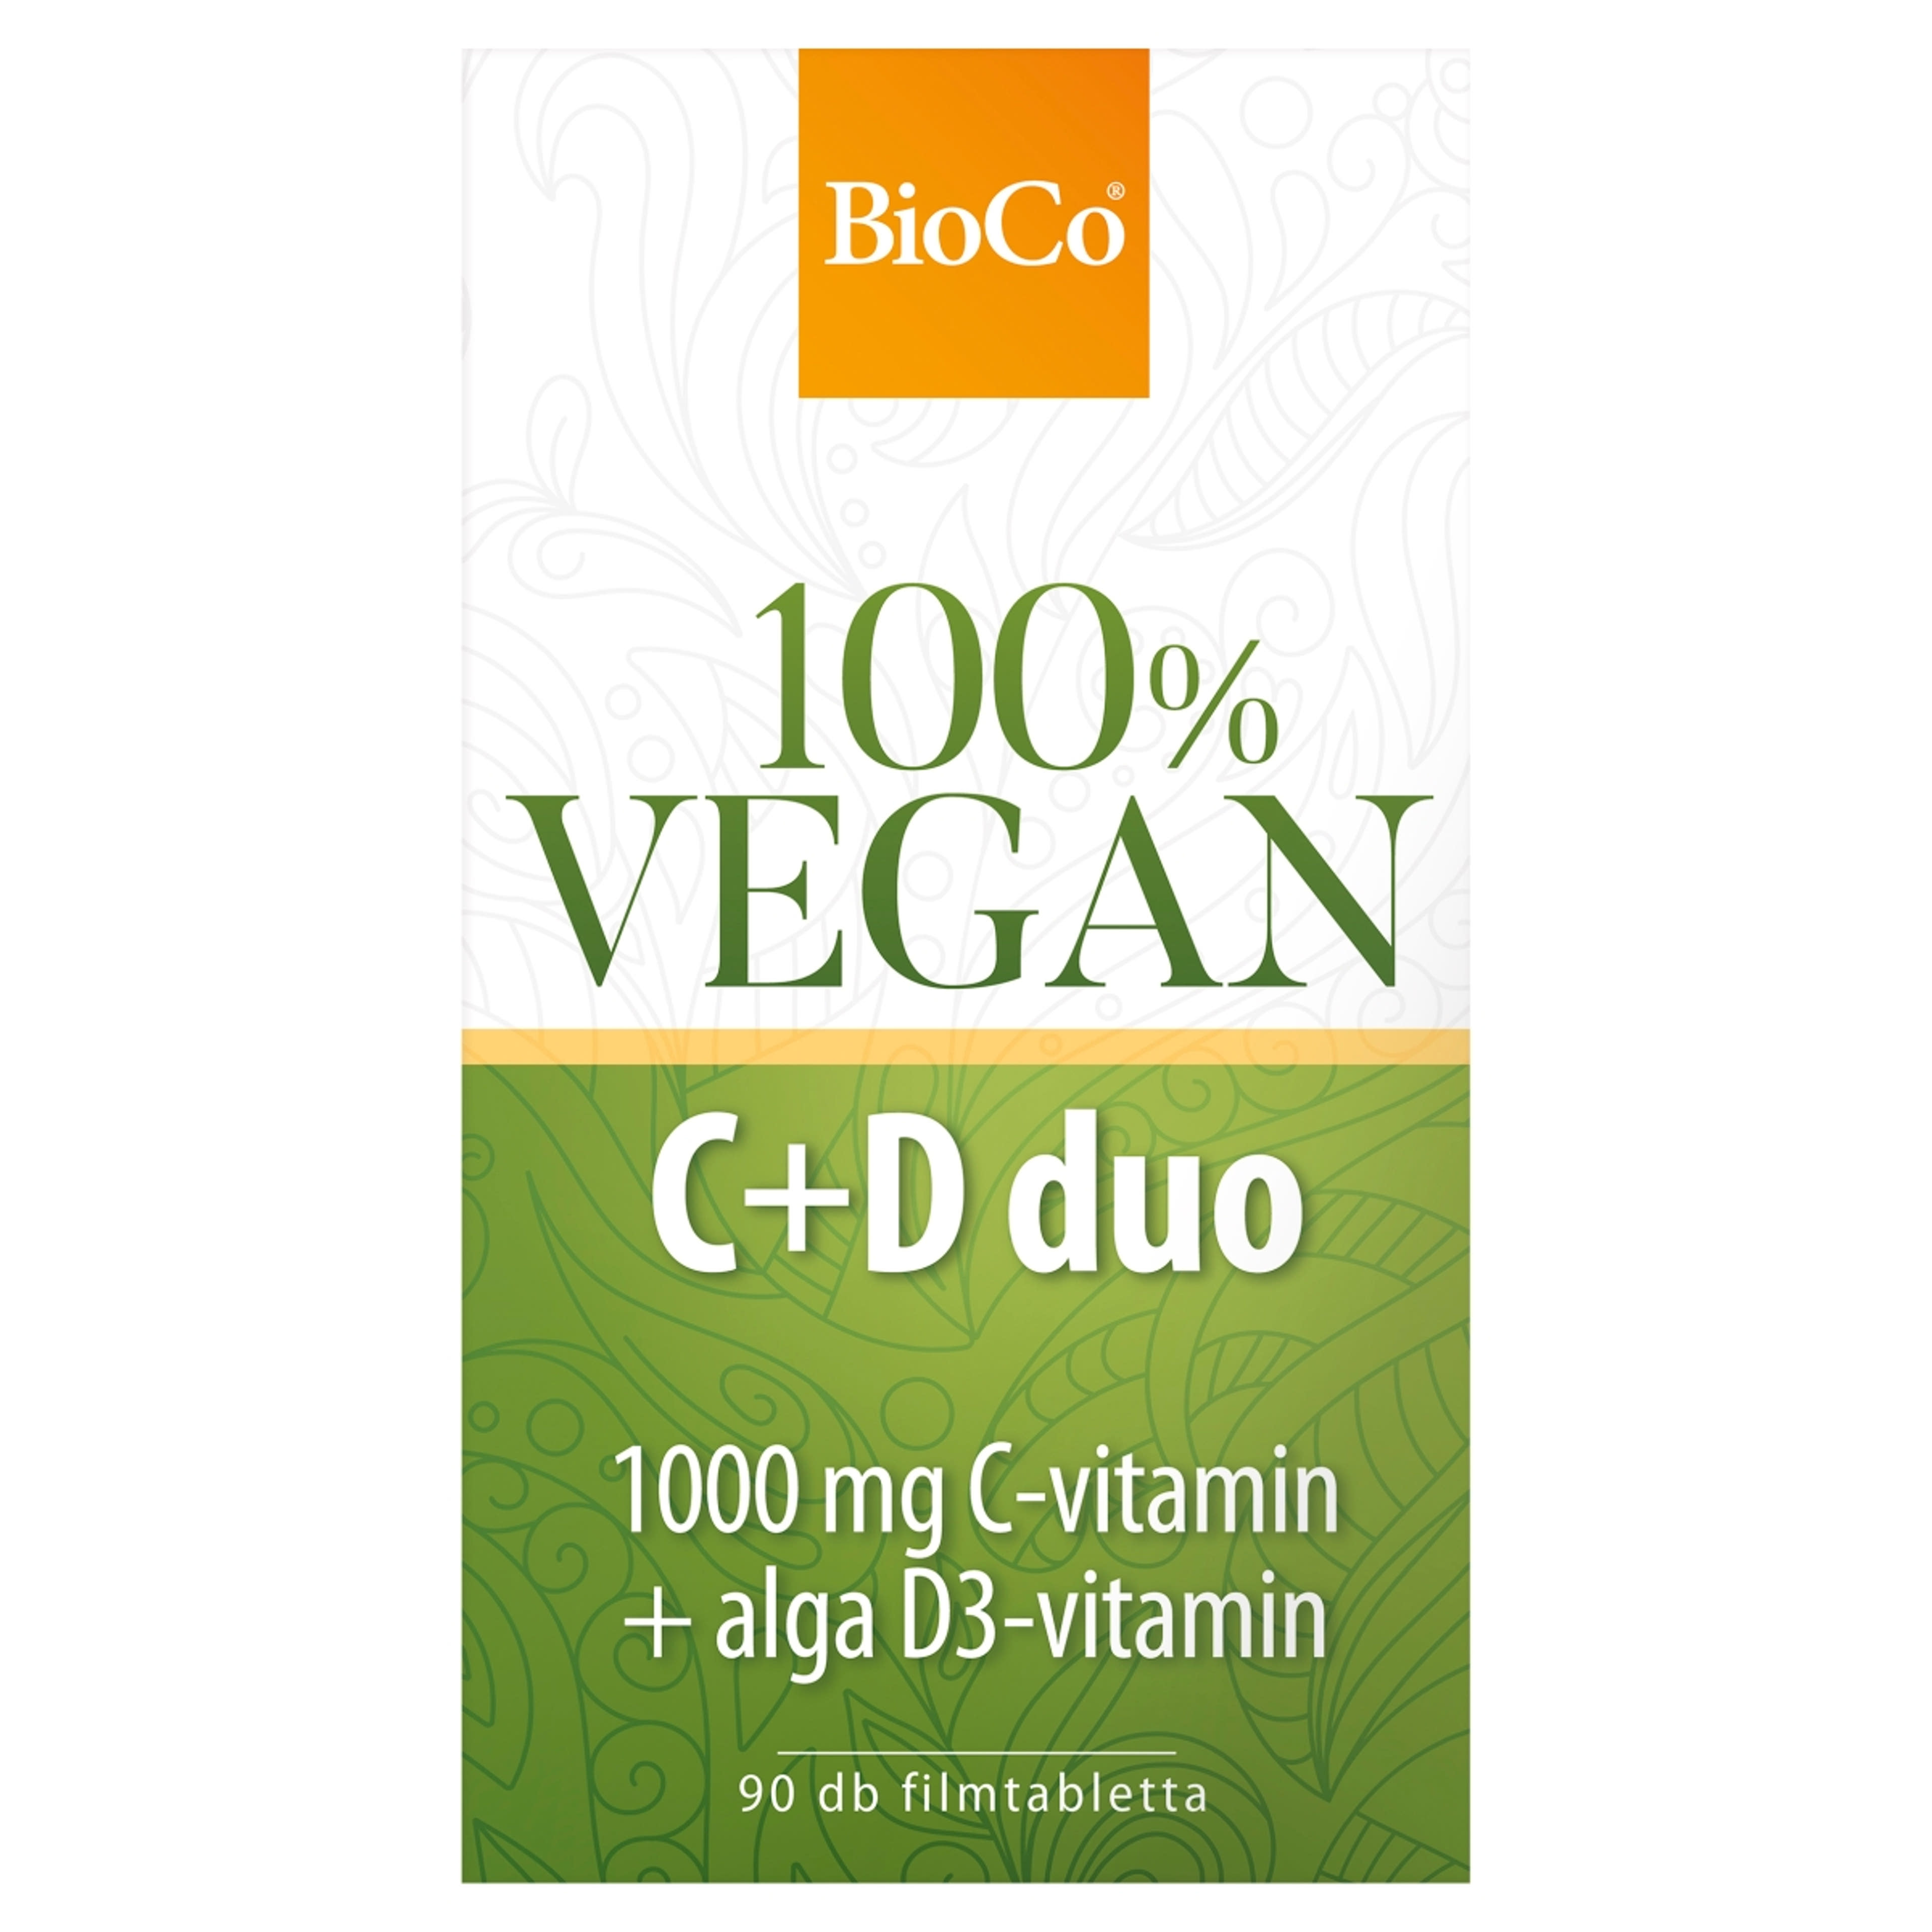 Bioco vegán C+D duo filmtabletta - 90 db